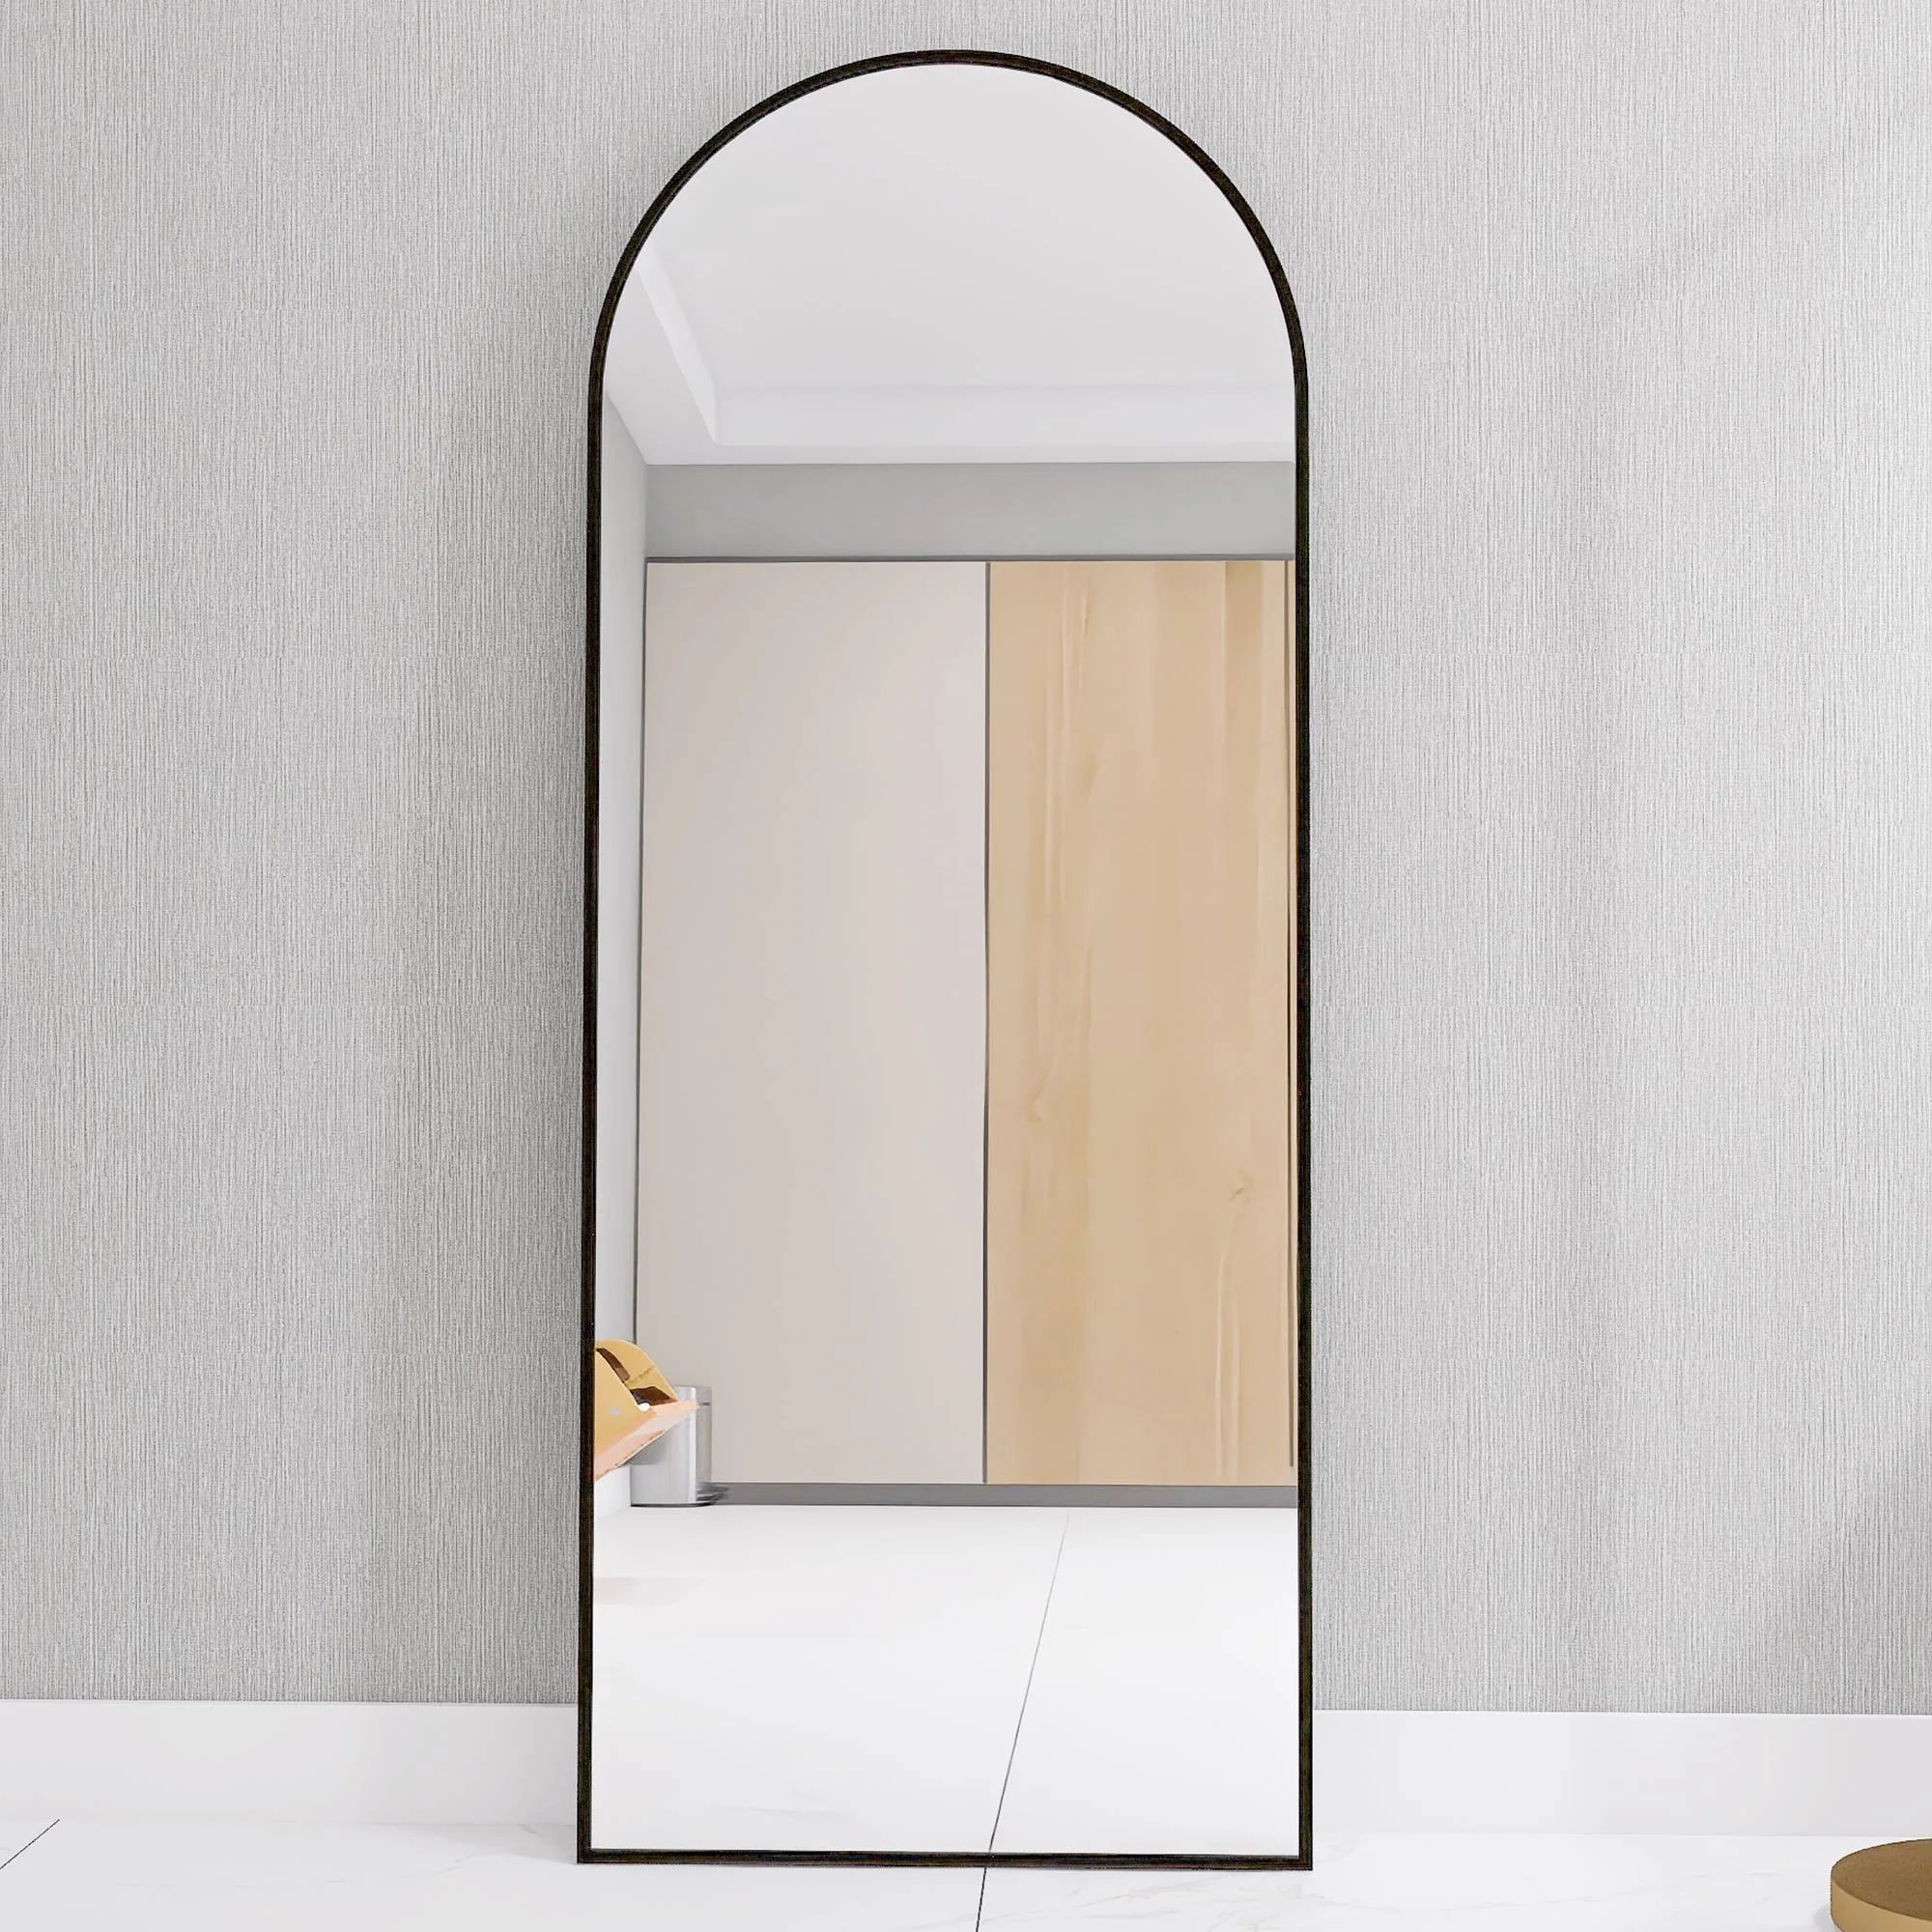 Floor Mirror Hanging Standing or Leaning | Bed Bath & Beyond